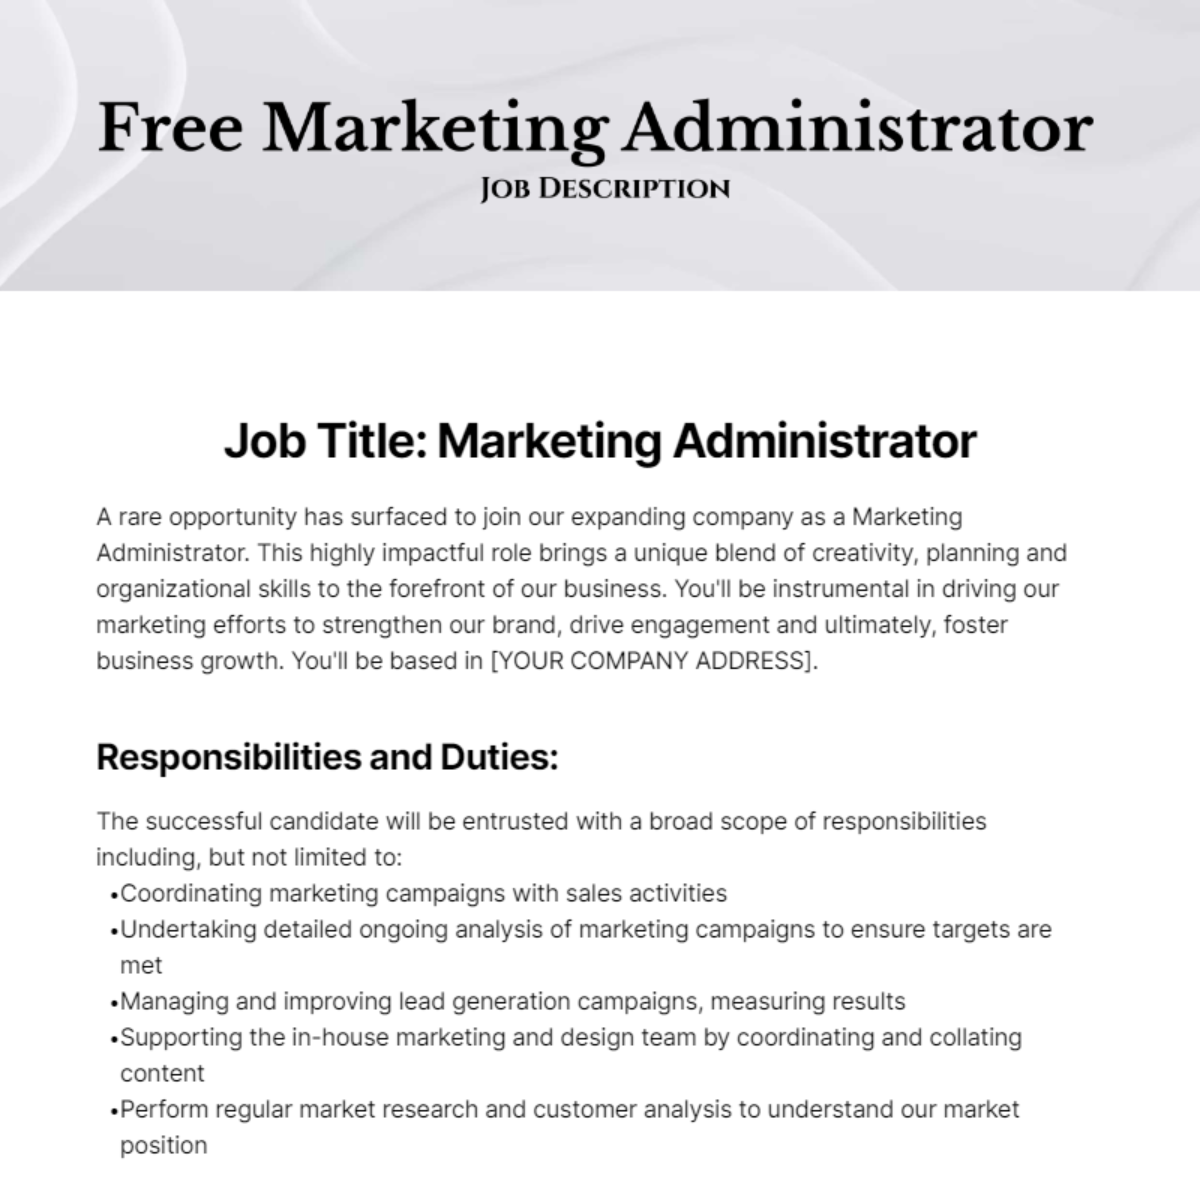 Free Marketing Administrator Job Description Template